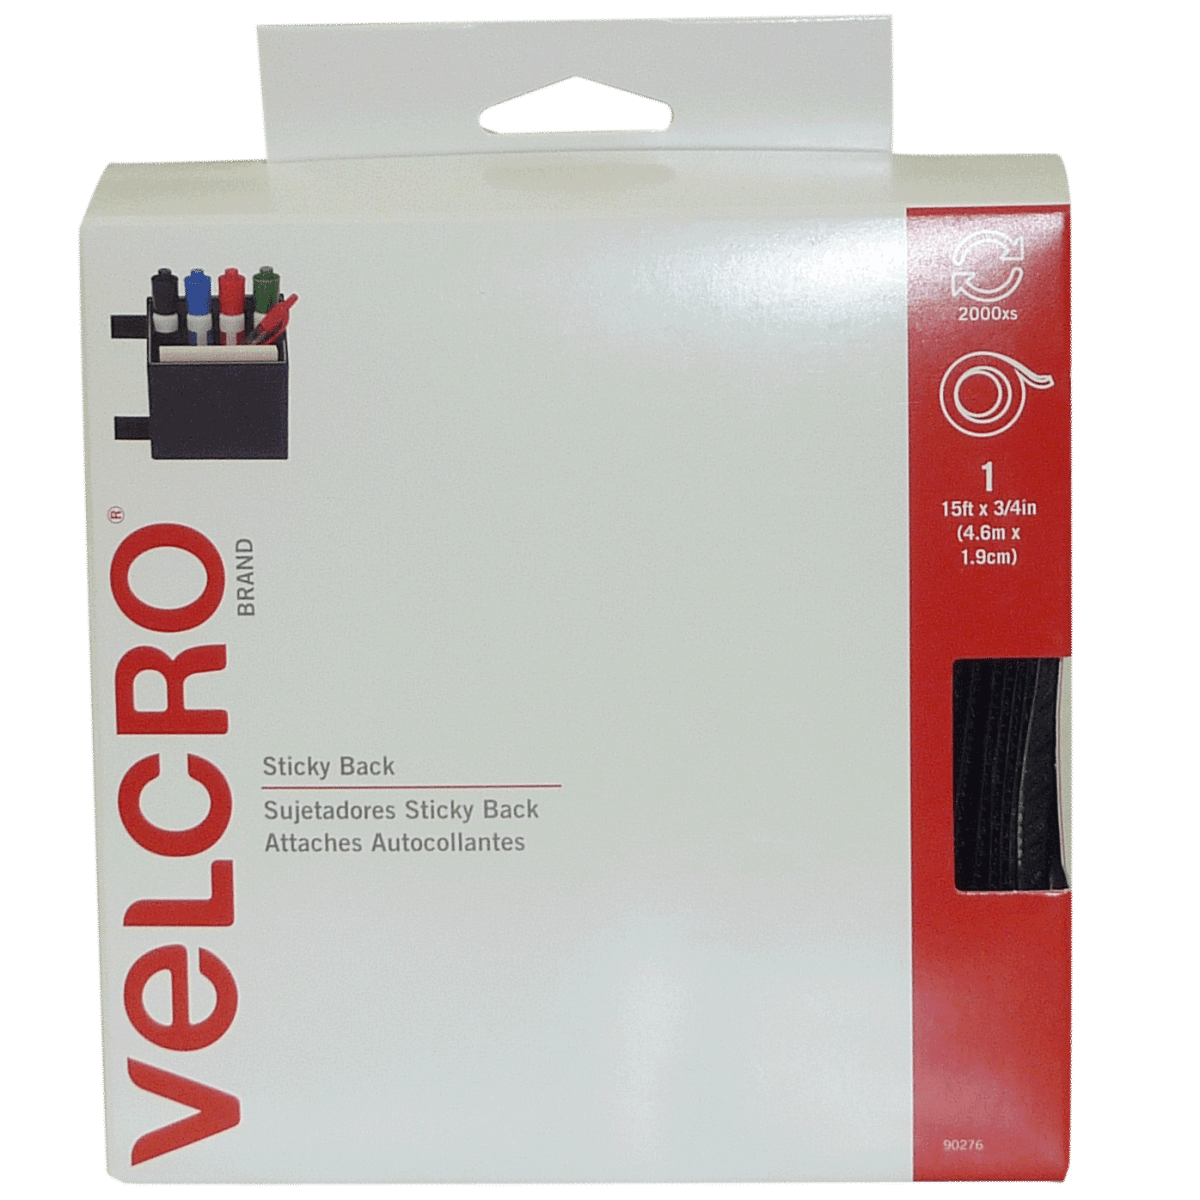 Attaches Autocollantes Velcro - 4.6m x 1.9cm